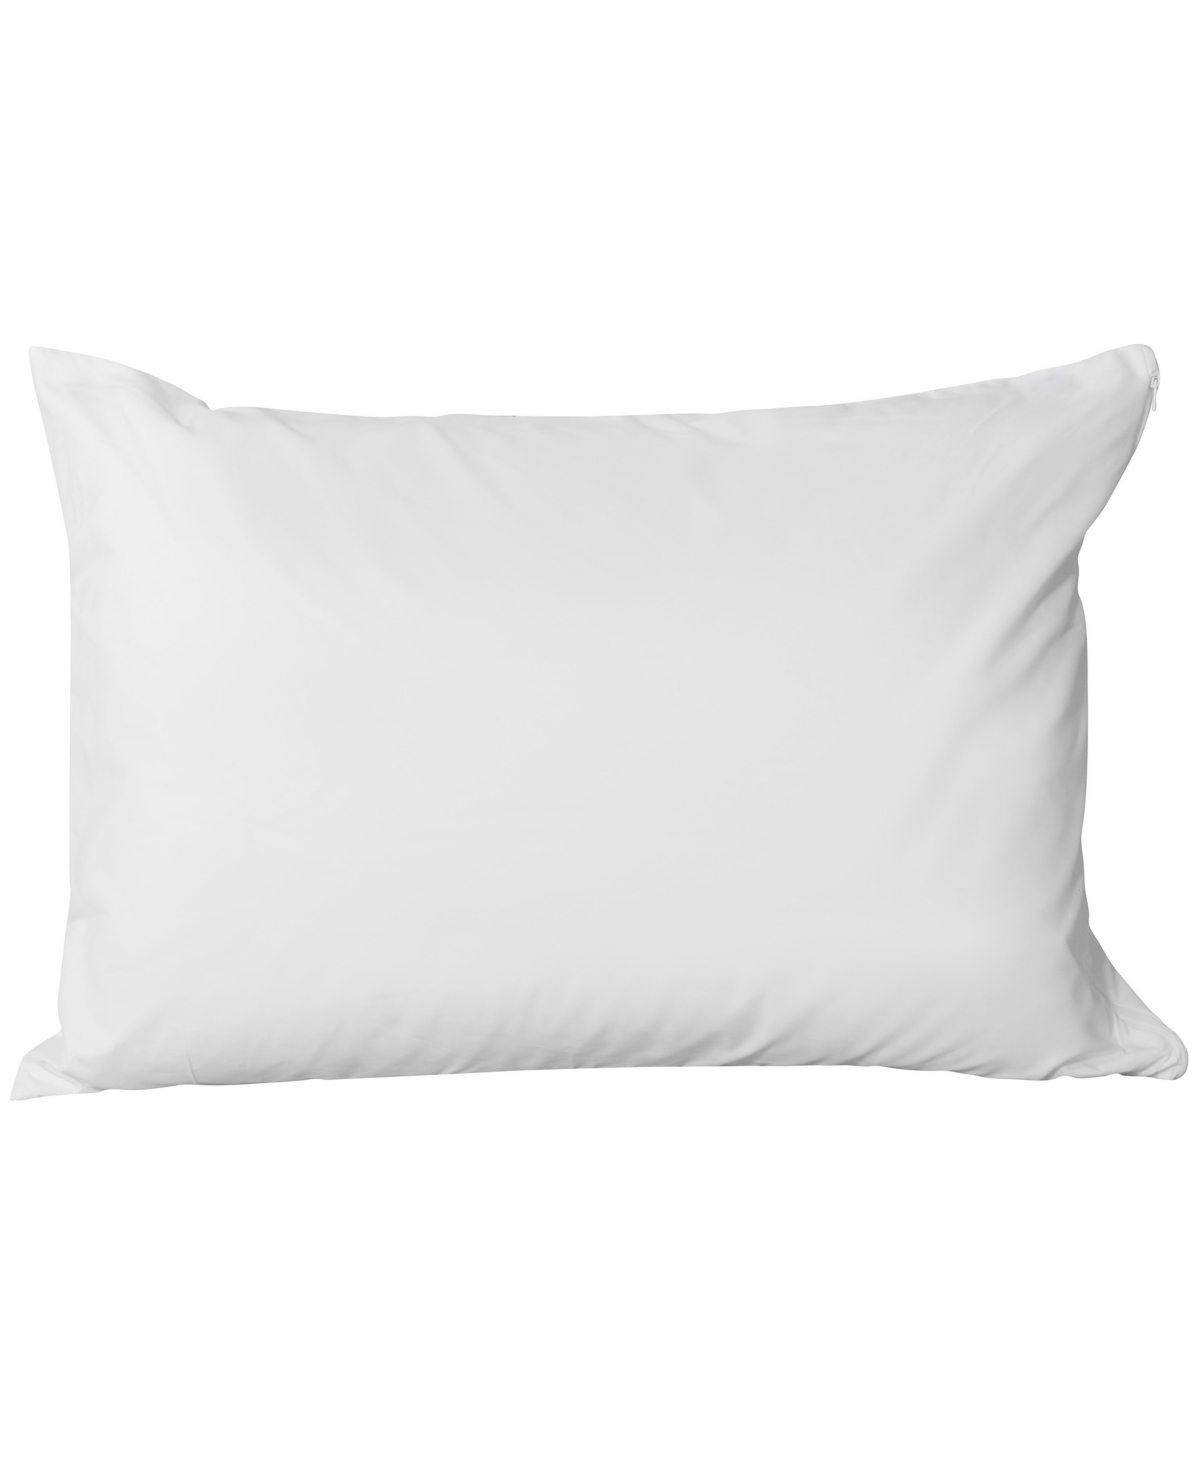 AllerEase Reserve Cotton Fresh Pillow Protector, Standard/Queen